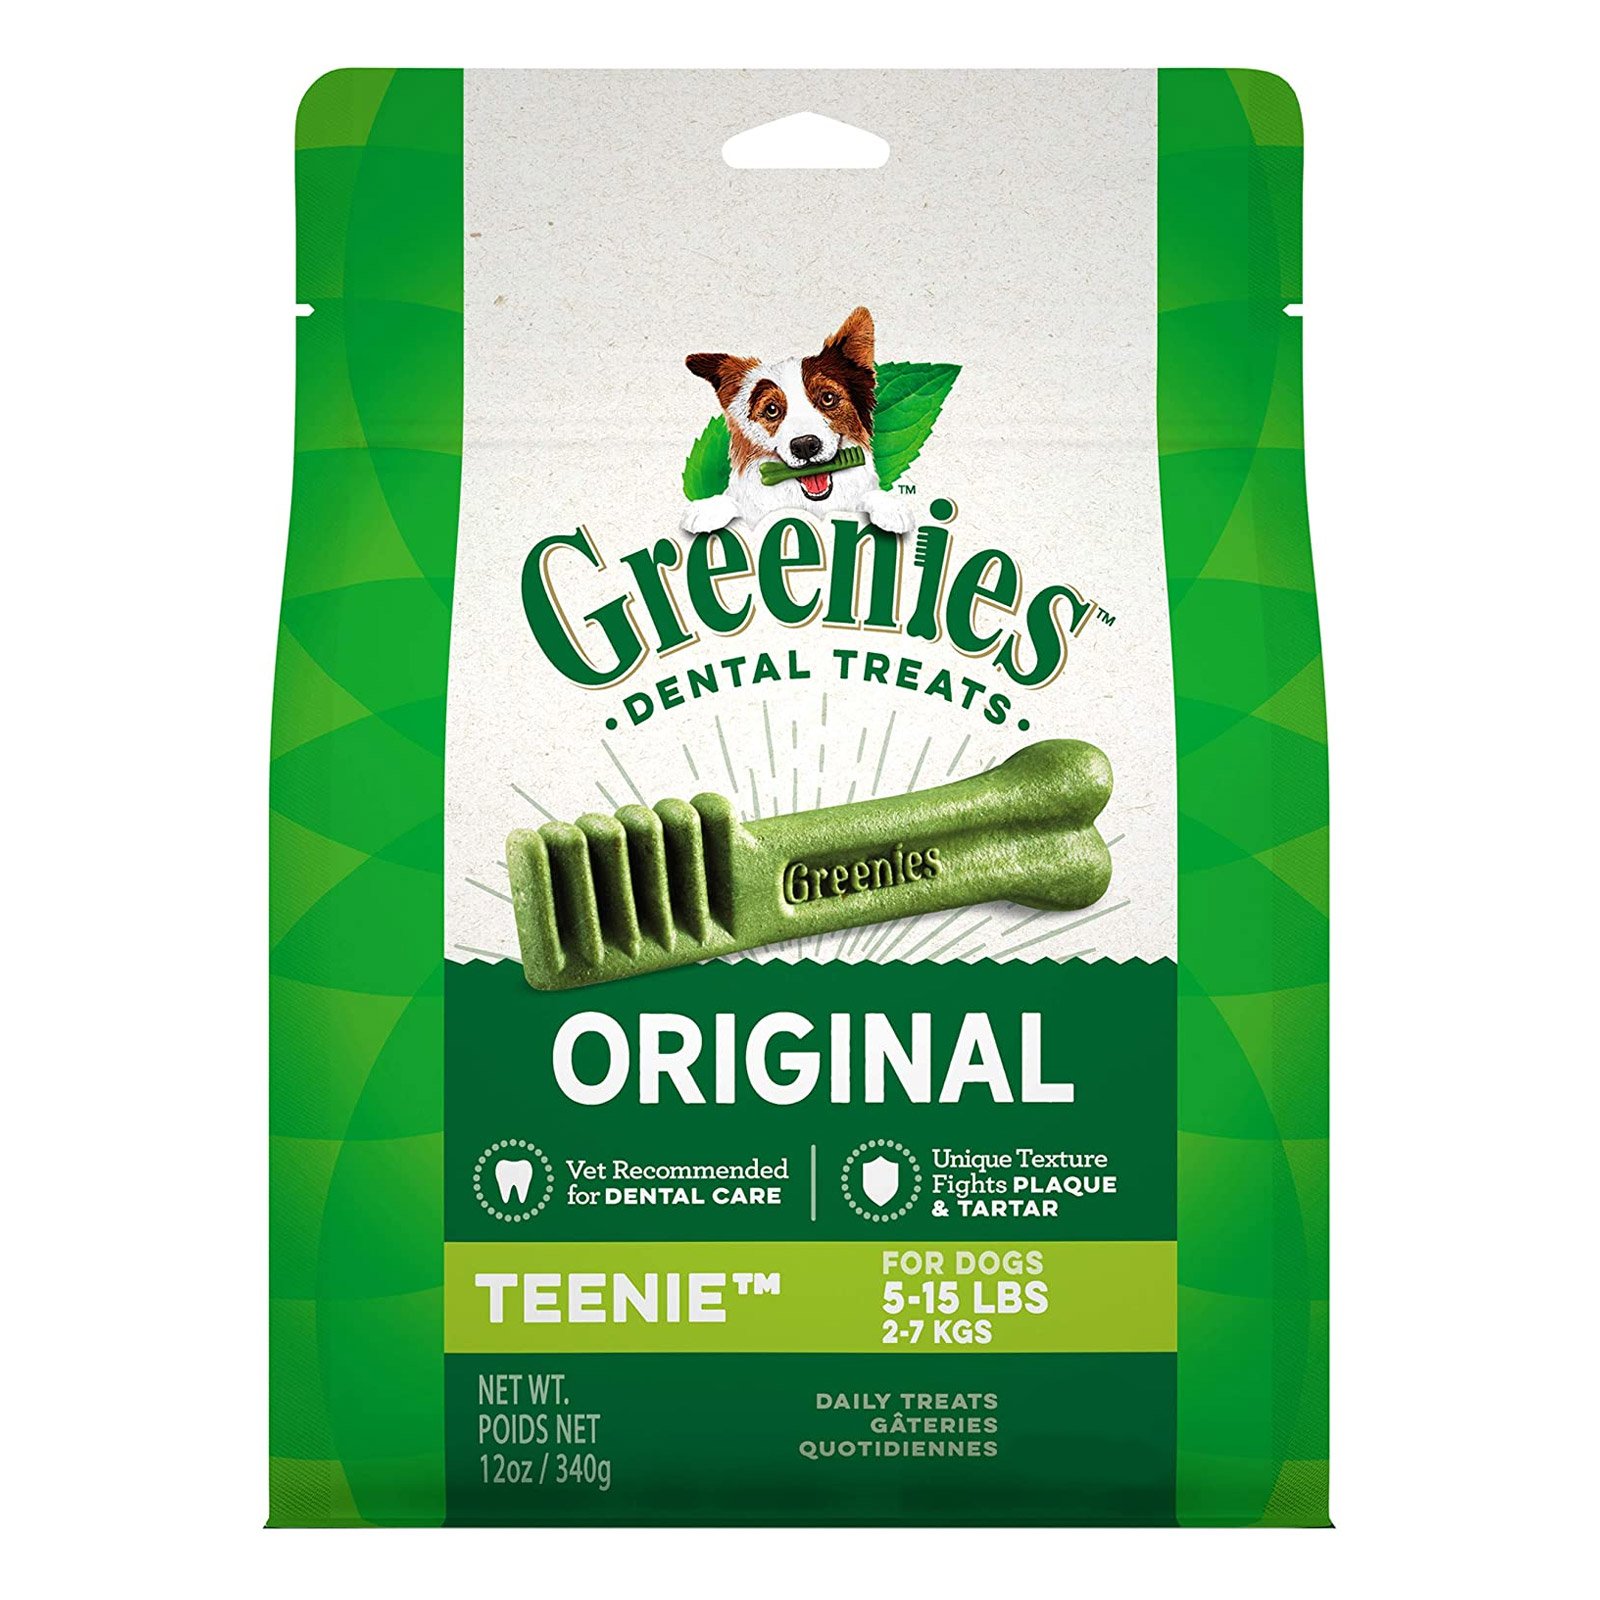 Greenies Original Dental Treats Teenie For Dogs 2-7 Kg